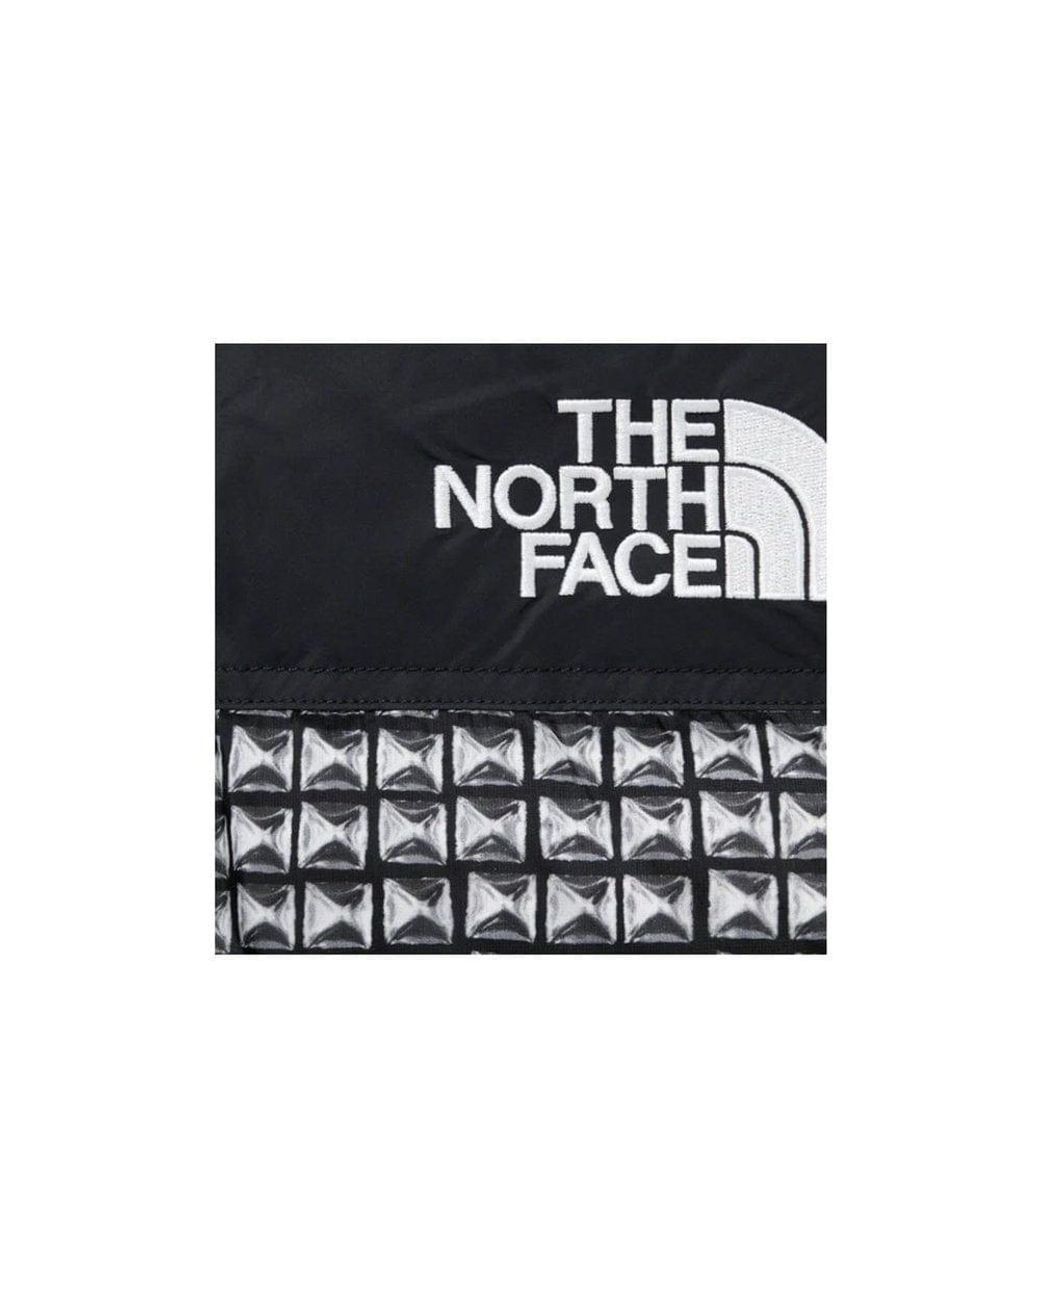 The North Face x Supreme Supreme X The North Face Studded Nuptse